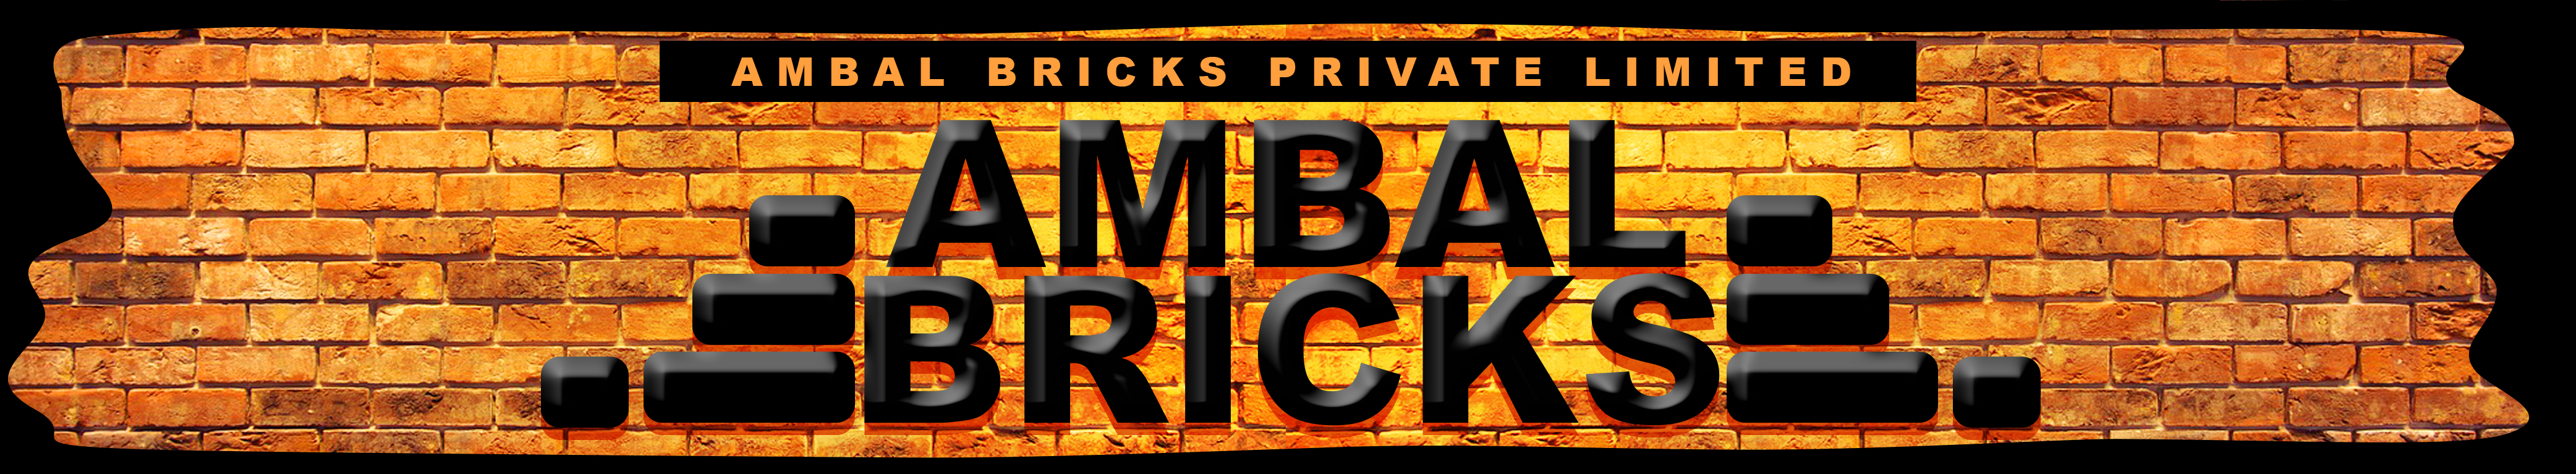 Ambal Bricks Banner Image